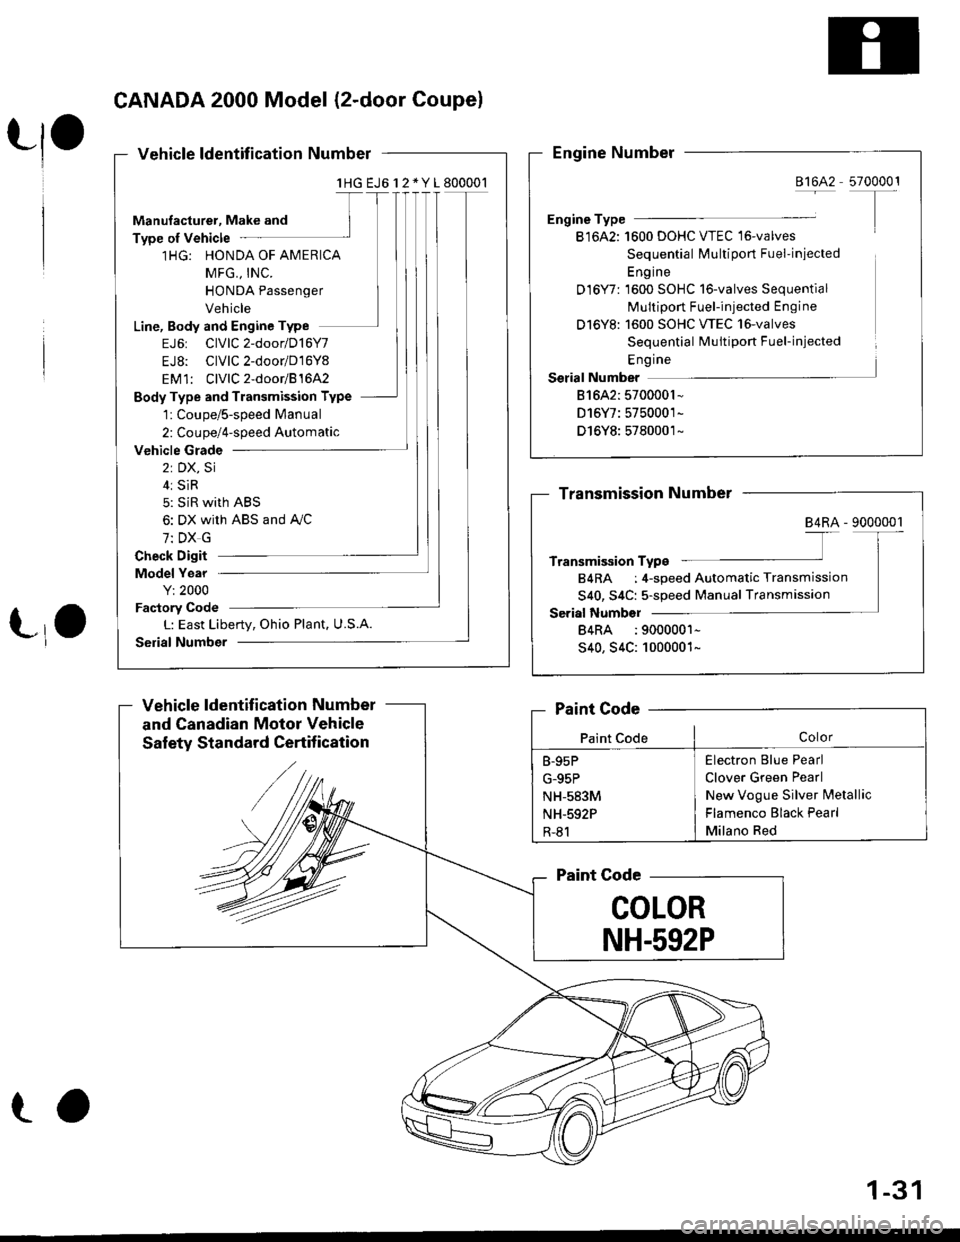 HONDA CIVIC 1997 6.G User Guide CANADA 2000 Model (2-door Coupel
Vehicle ldentification Number
lHG EJ6l 2 * Y 1800001
Manufacturer, Make and
Type of Vehicle
1HG: HONDA OF AMERICA
MFG,, INC.
HONDA Passenger
Vehicle
Line, Body and En